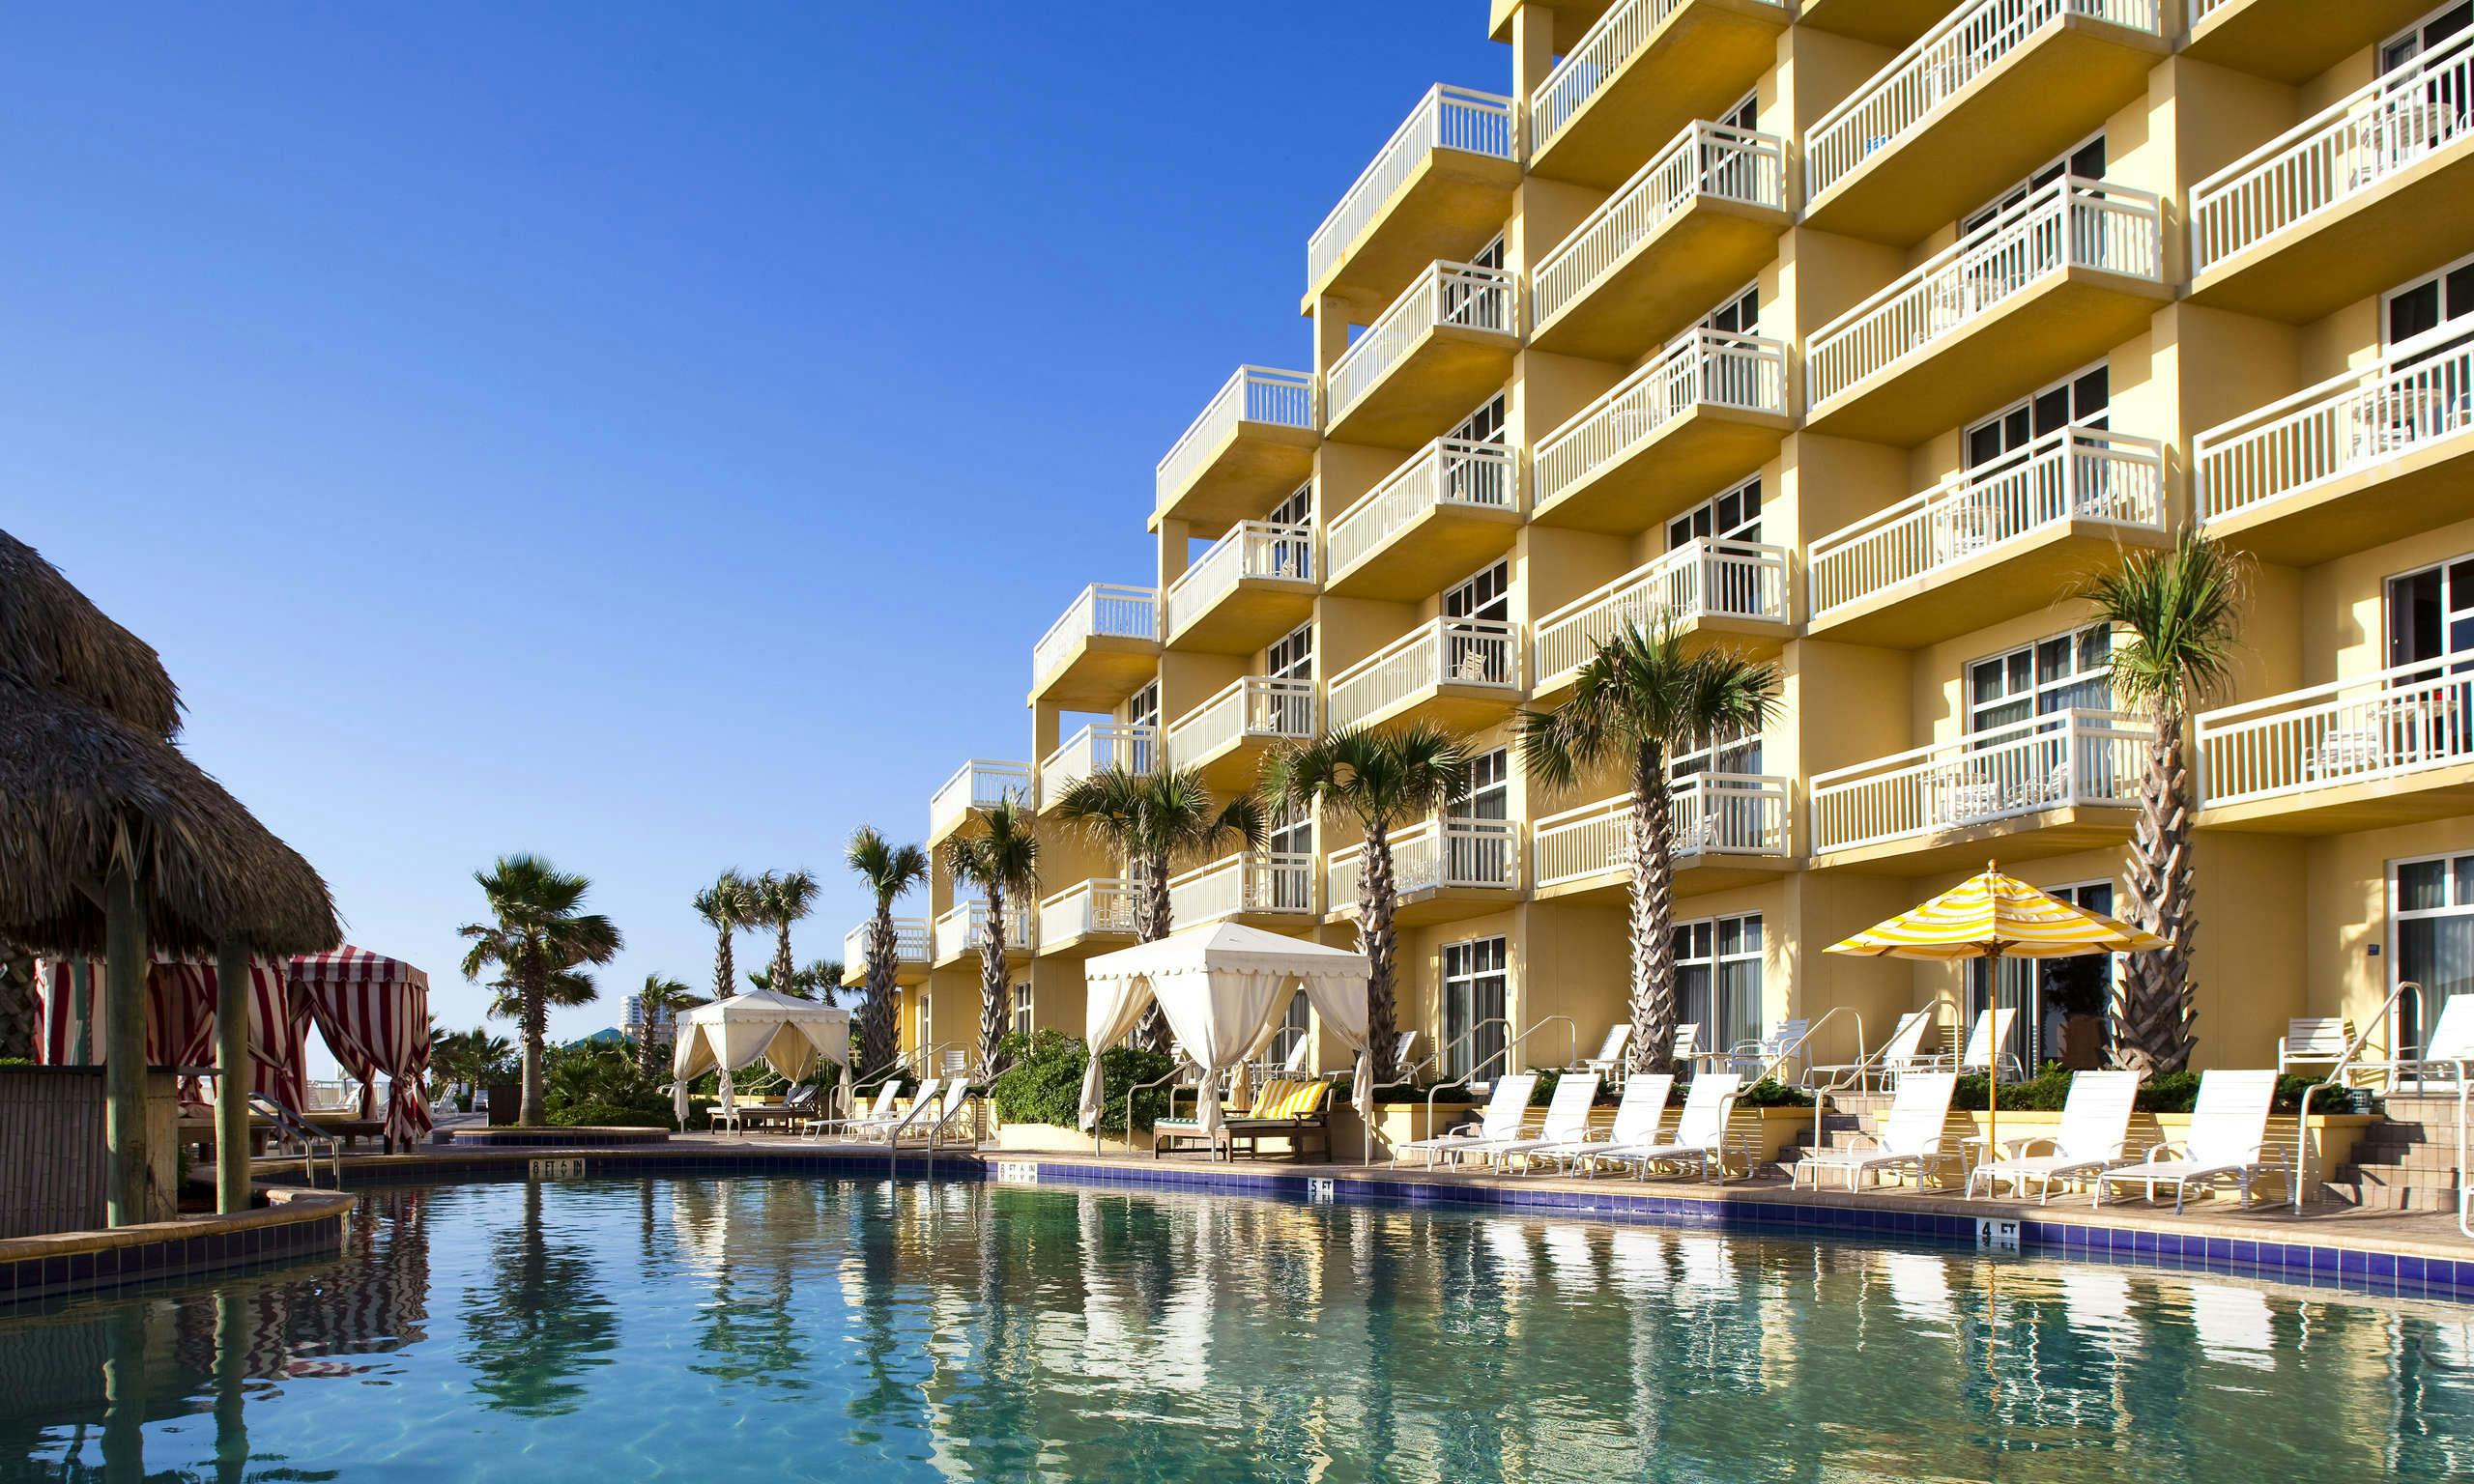 Cheap Last Minute Hotel Deals in Daytona Beach from $67 - HotelTonight